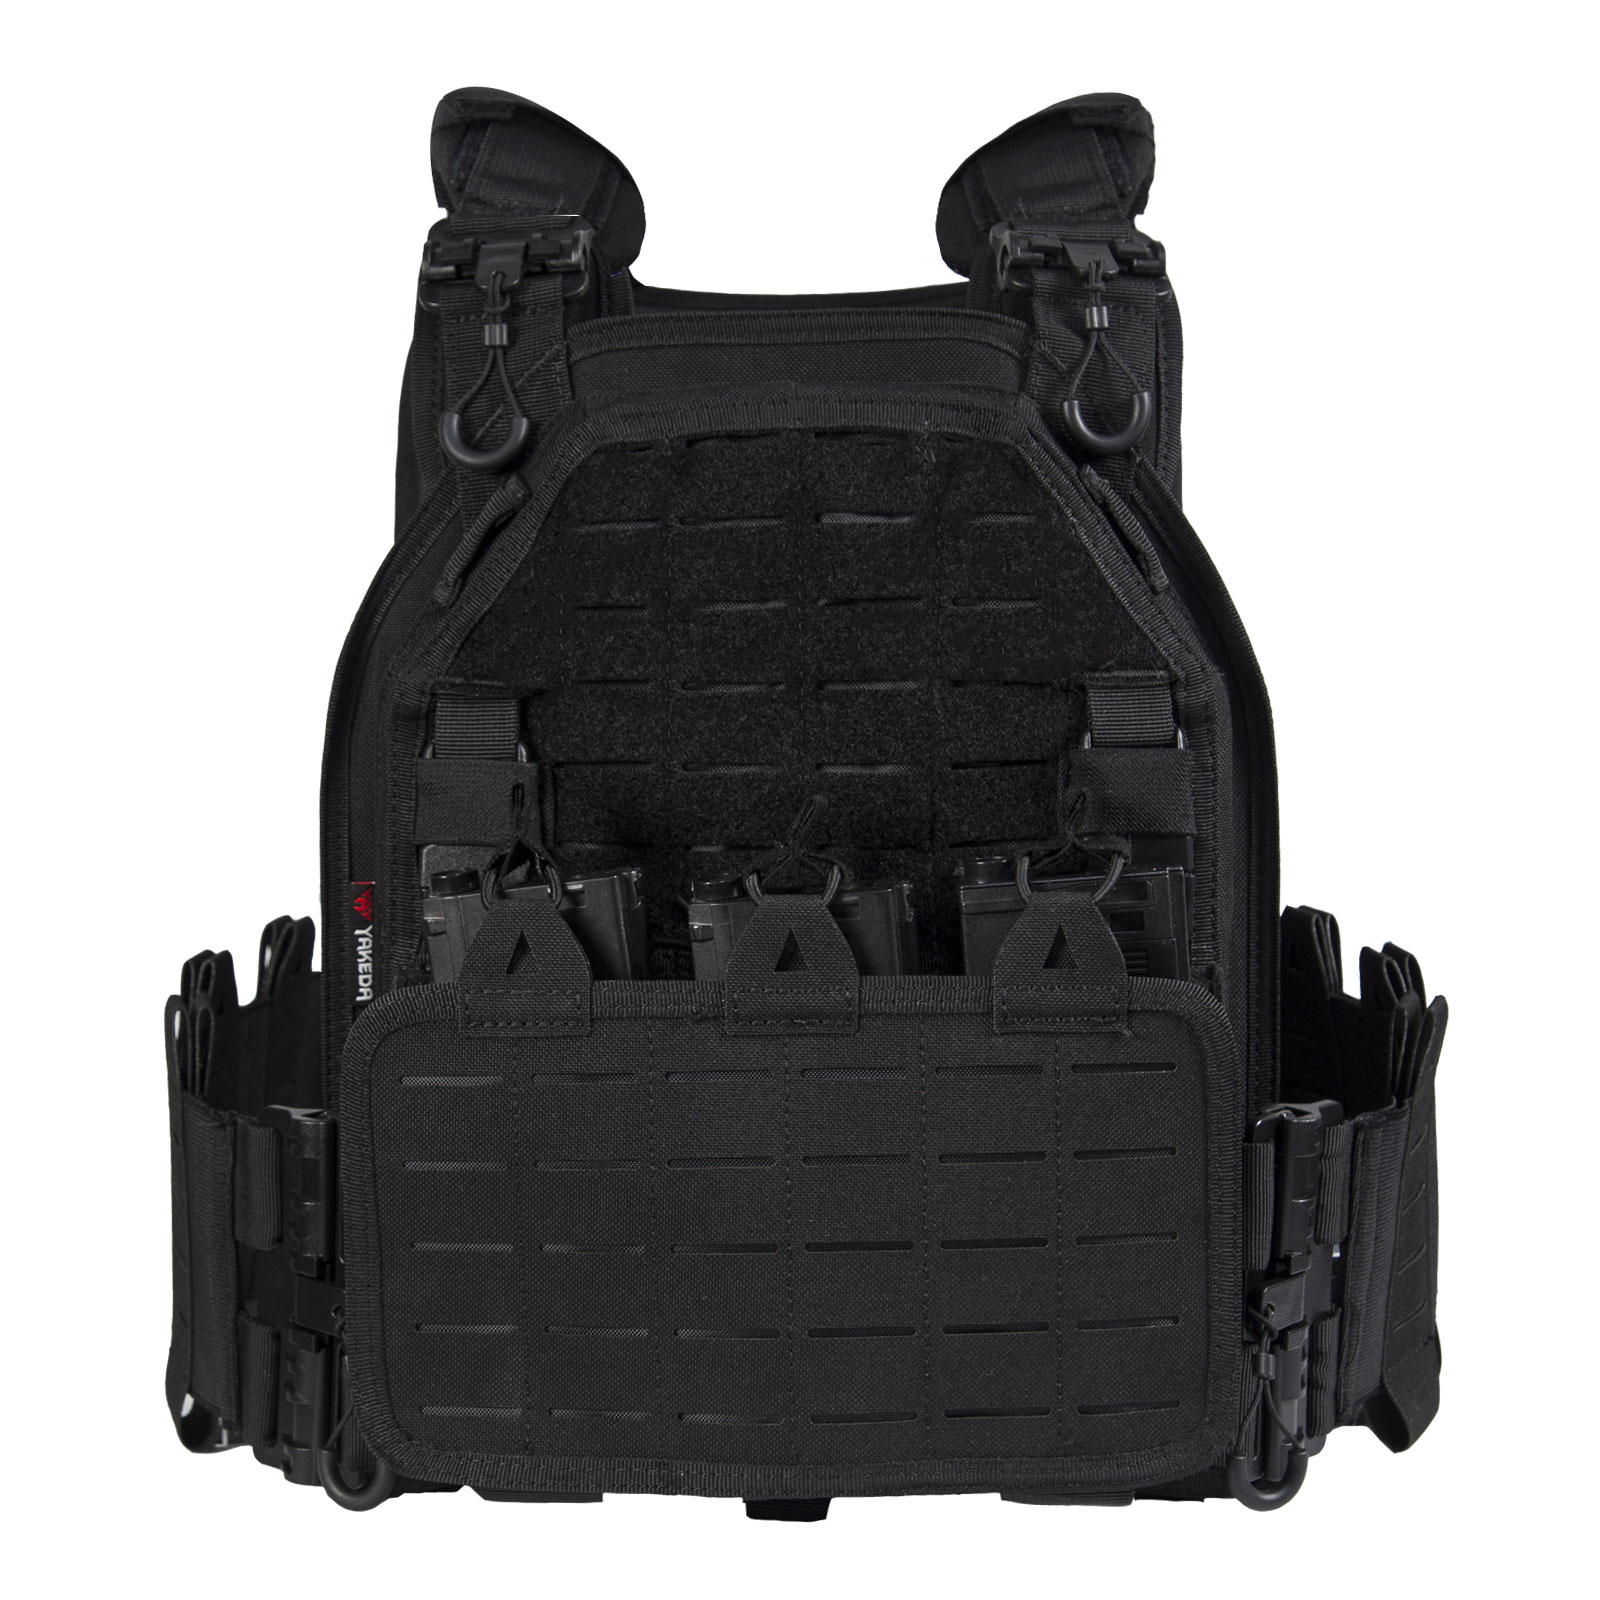 Buy CALANDIS Tactical Vest Plate Carrier Assault Gear Jacket for